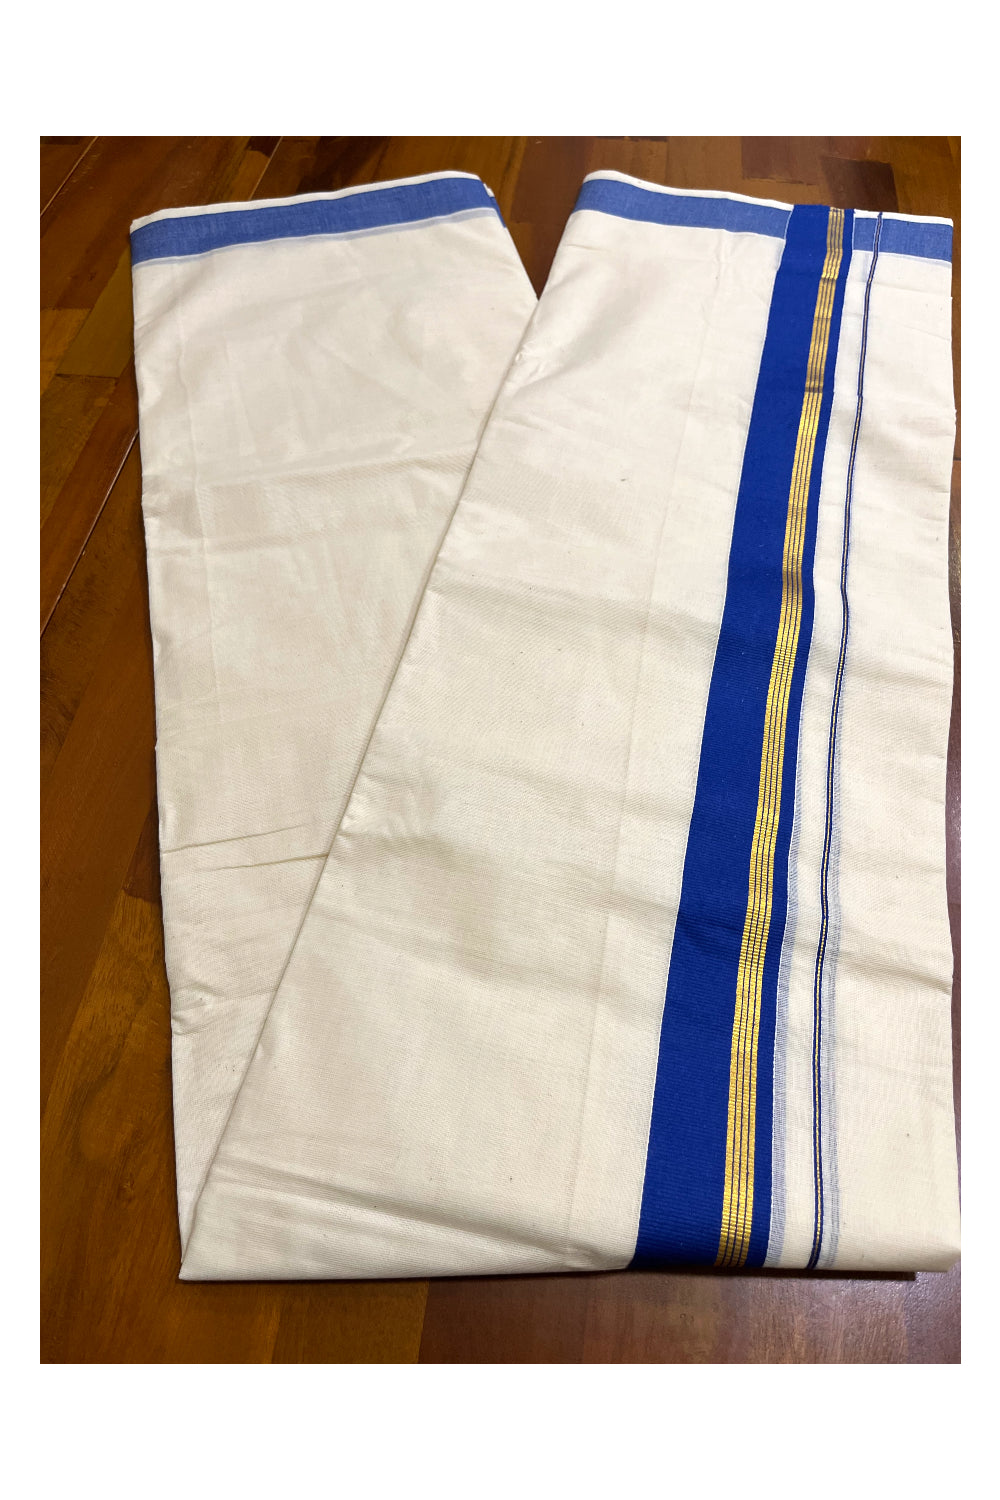 Kerala Pure Cotton Double Mundu with Blue and Kasavu Border (South Indian Kerala Dhoti)